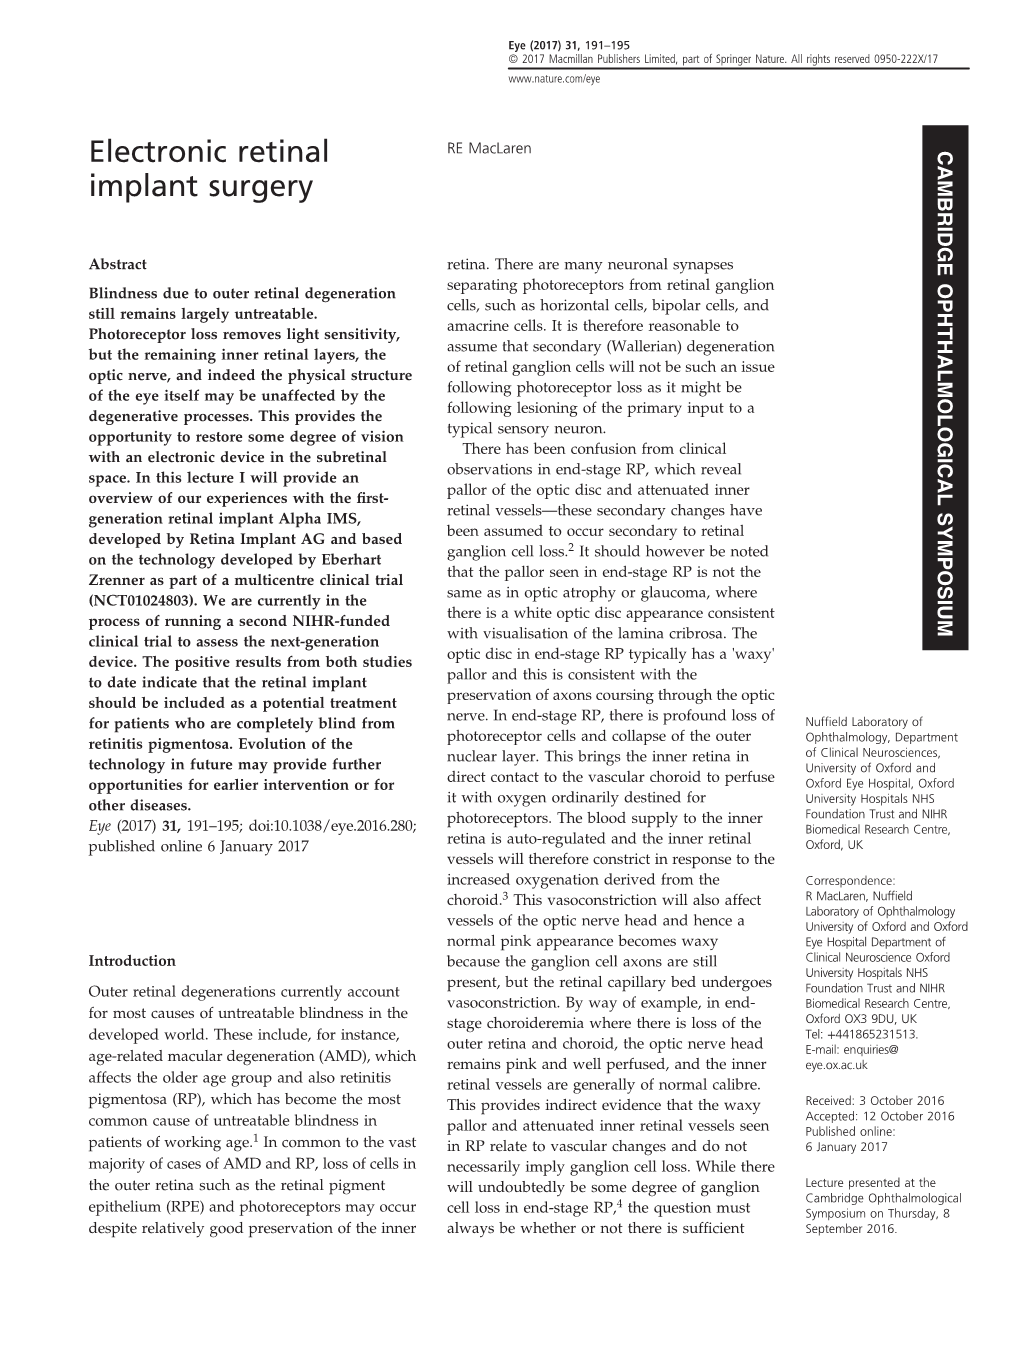 Electronic Retinal Implant Surgery RE Maclaren 192